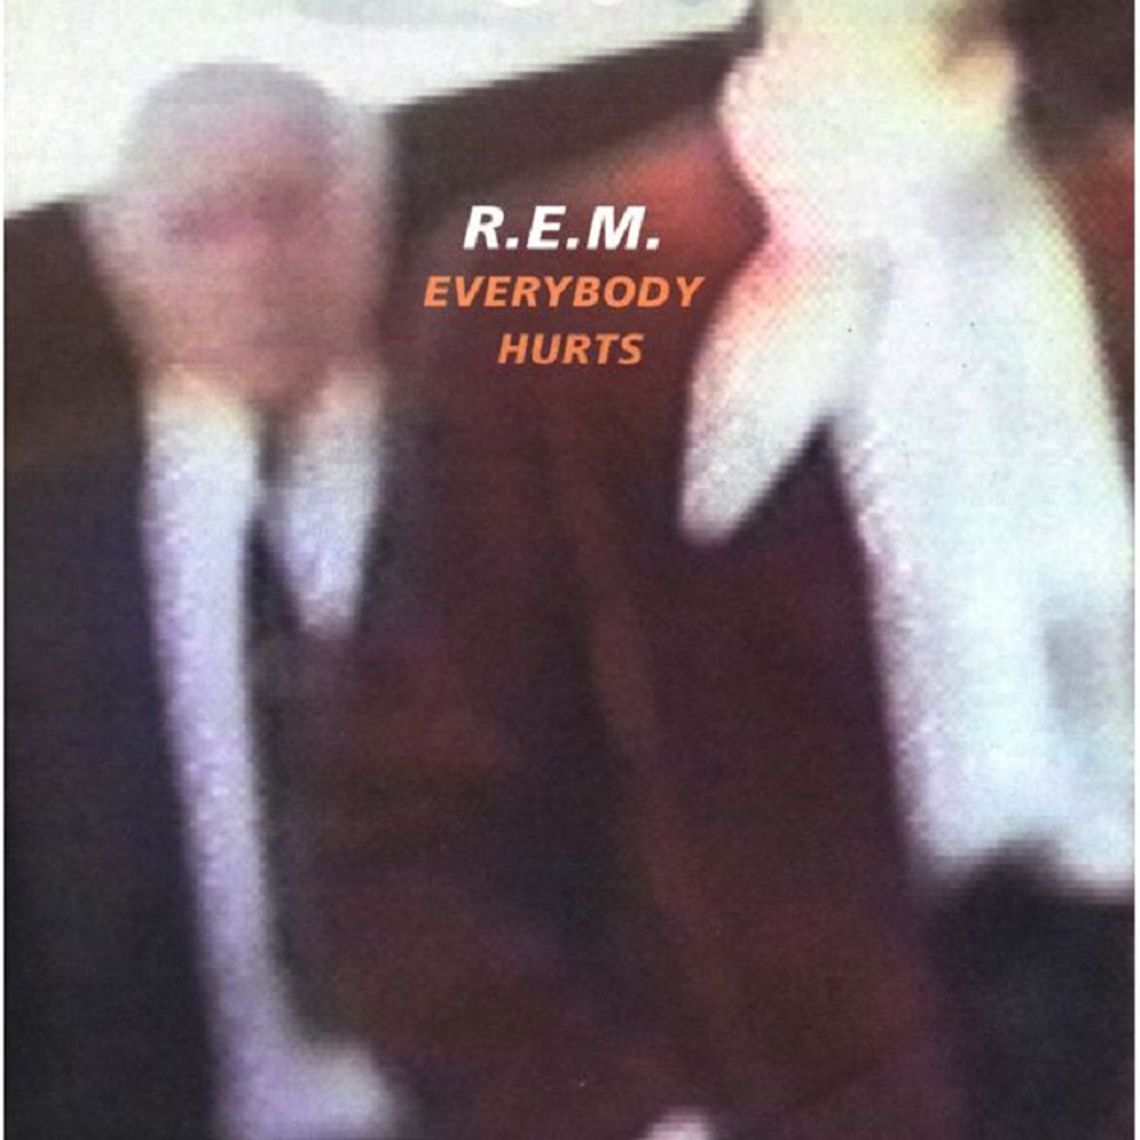 REM "Everybody hurts"